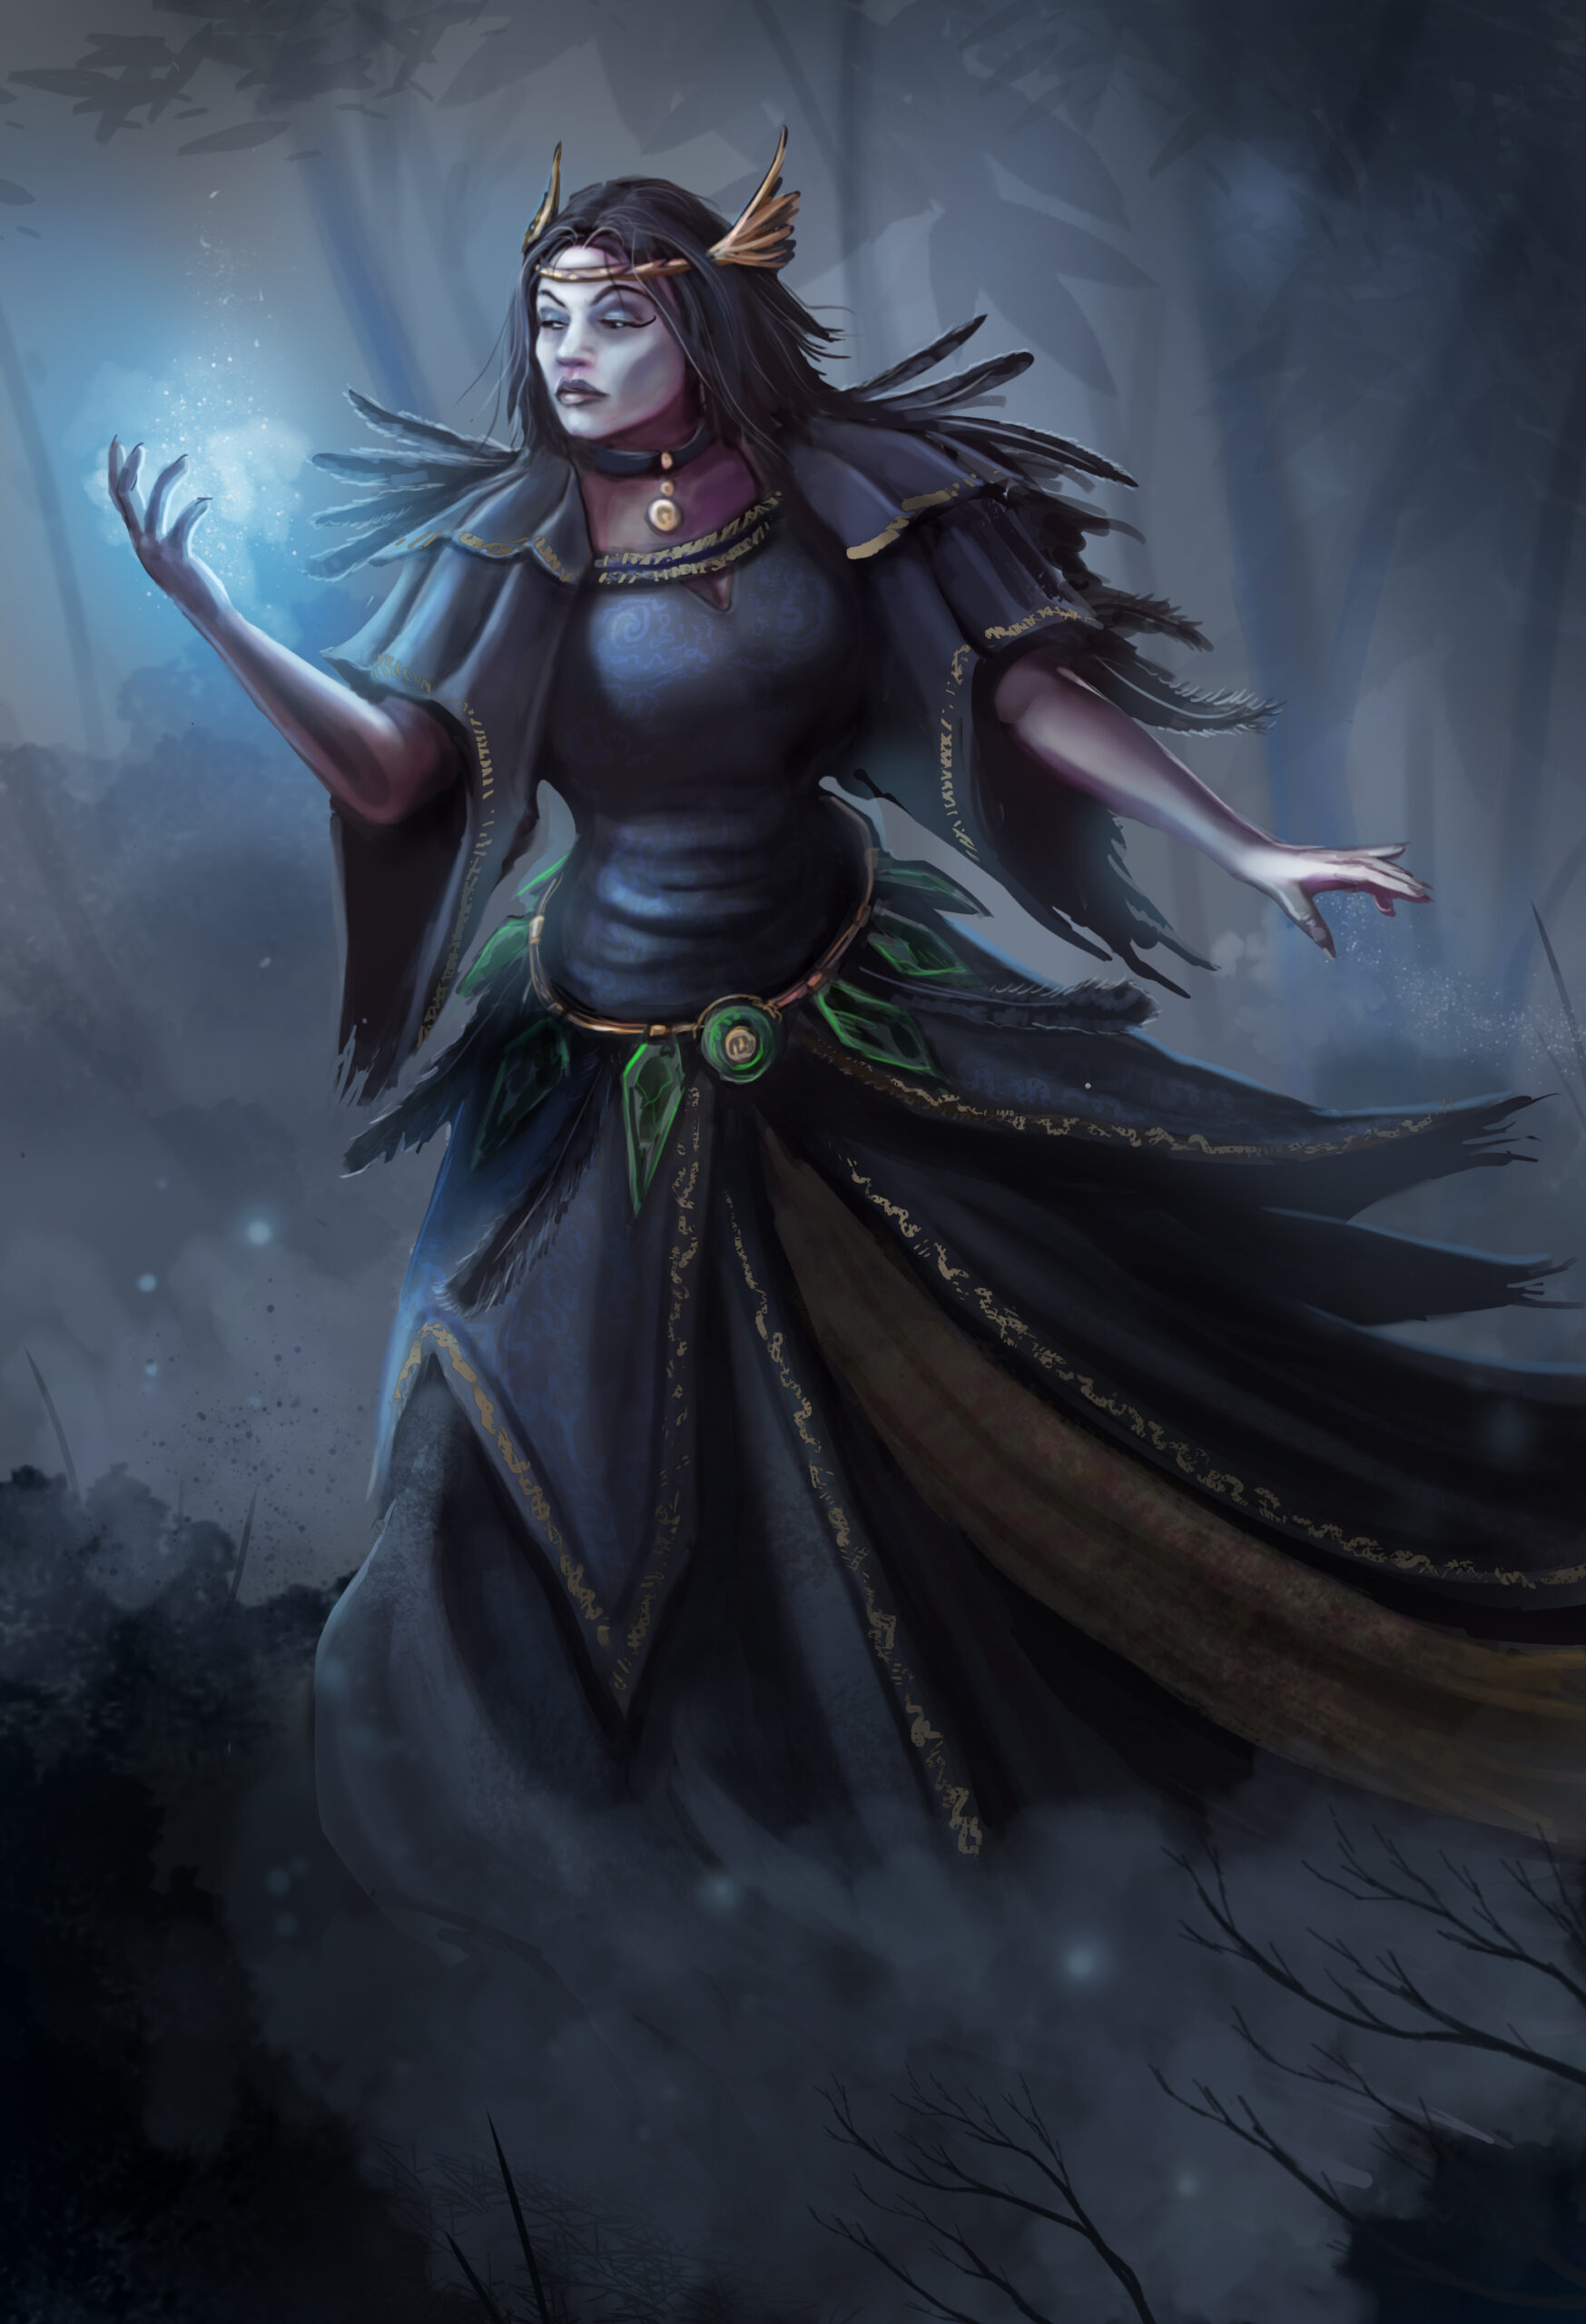 Morgiana Le Fay, an enchantress from Arthurian Legend